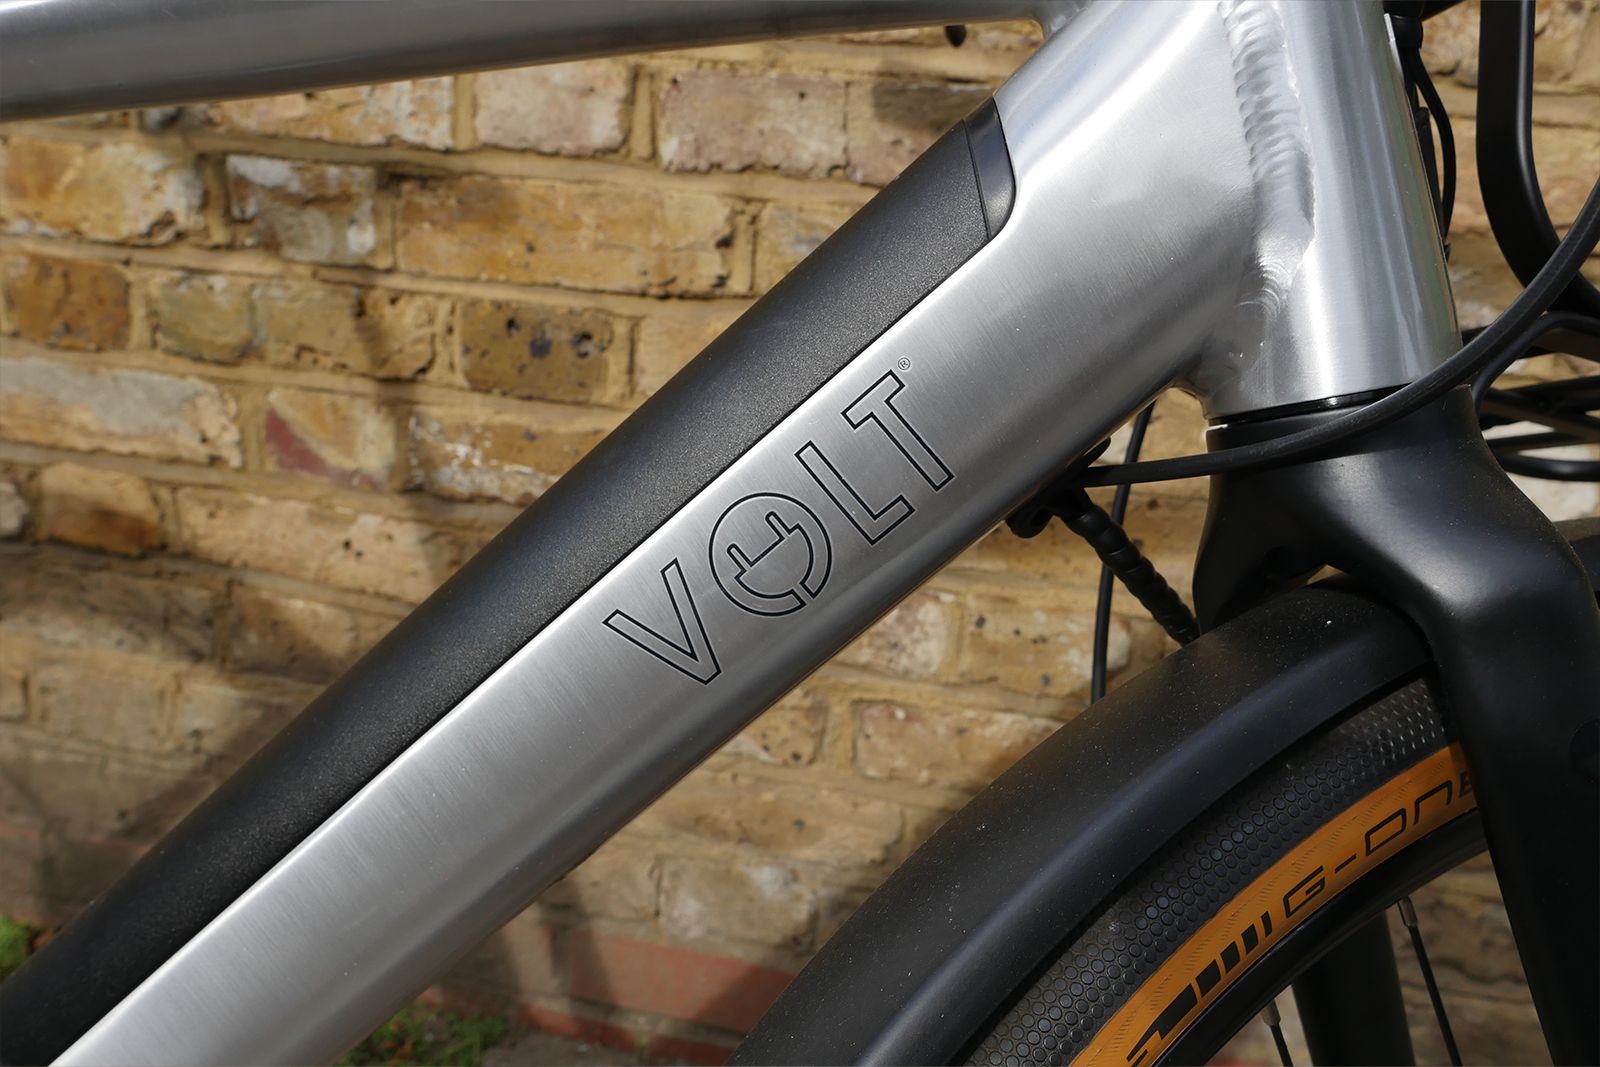 Volt London ebike review: Reaching cruising speed photo 11